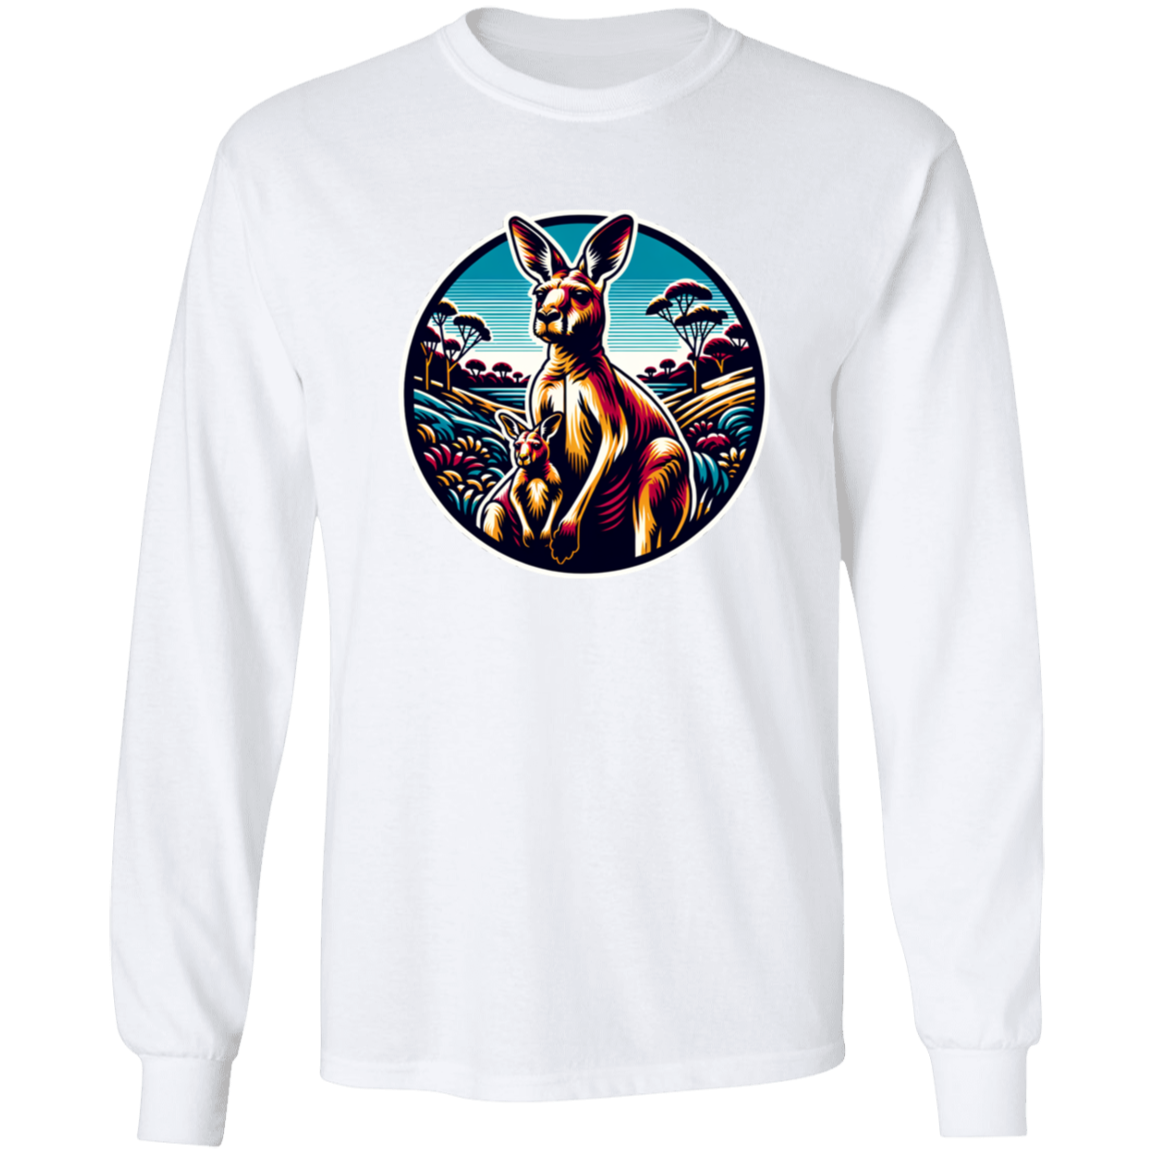 Kangaroo and Joey Graphic - T-shirts, Hoodies and Sweatshirts